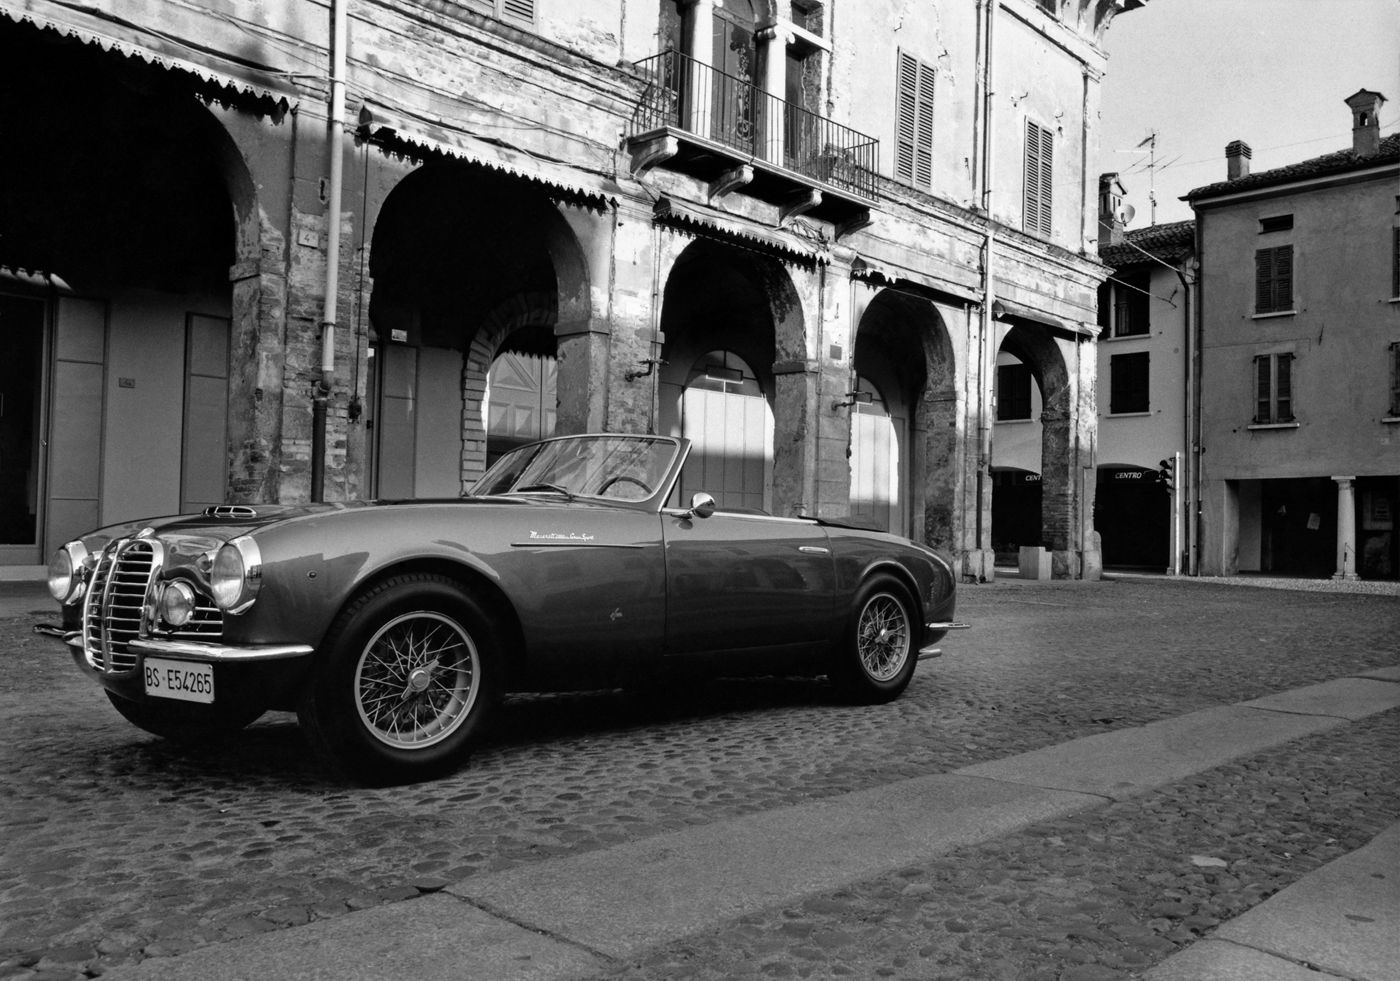 1950 Maserati A6G 2000 - the classic car model on an Italian road